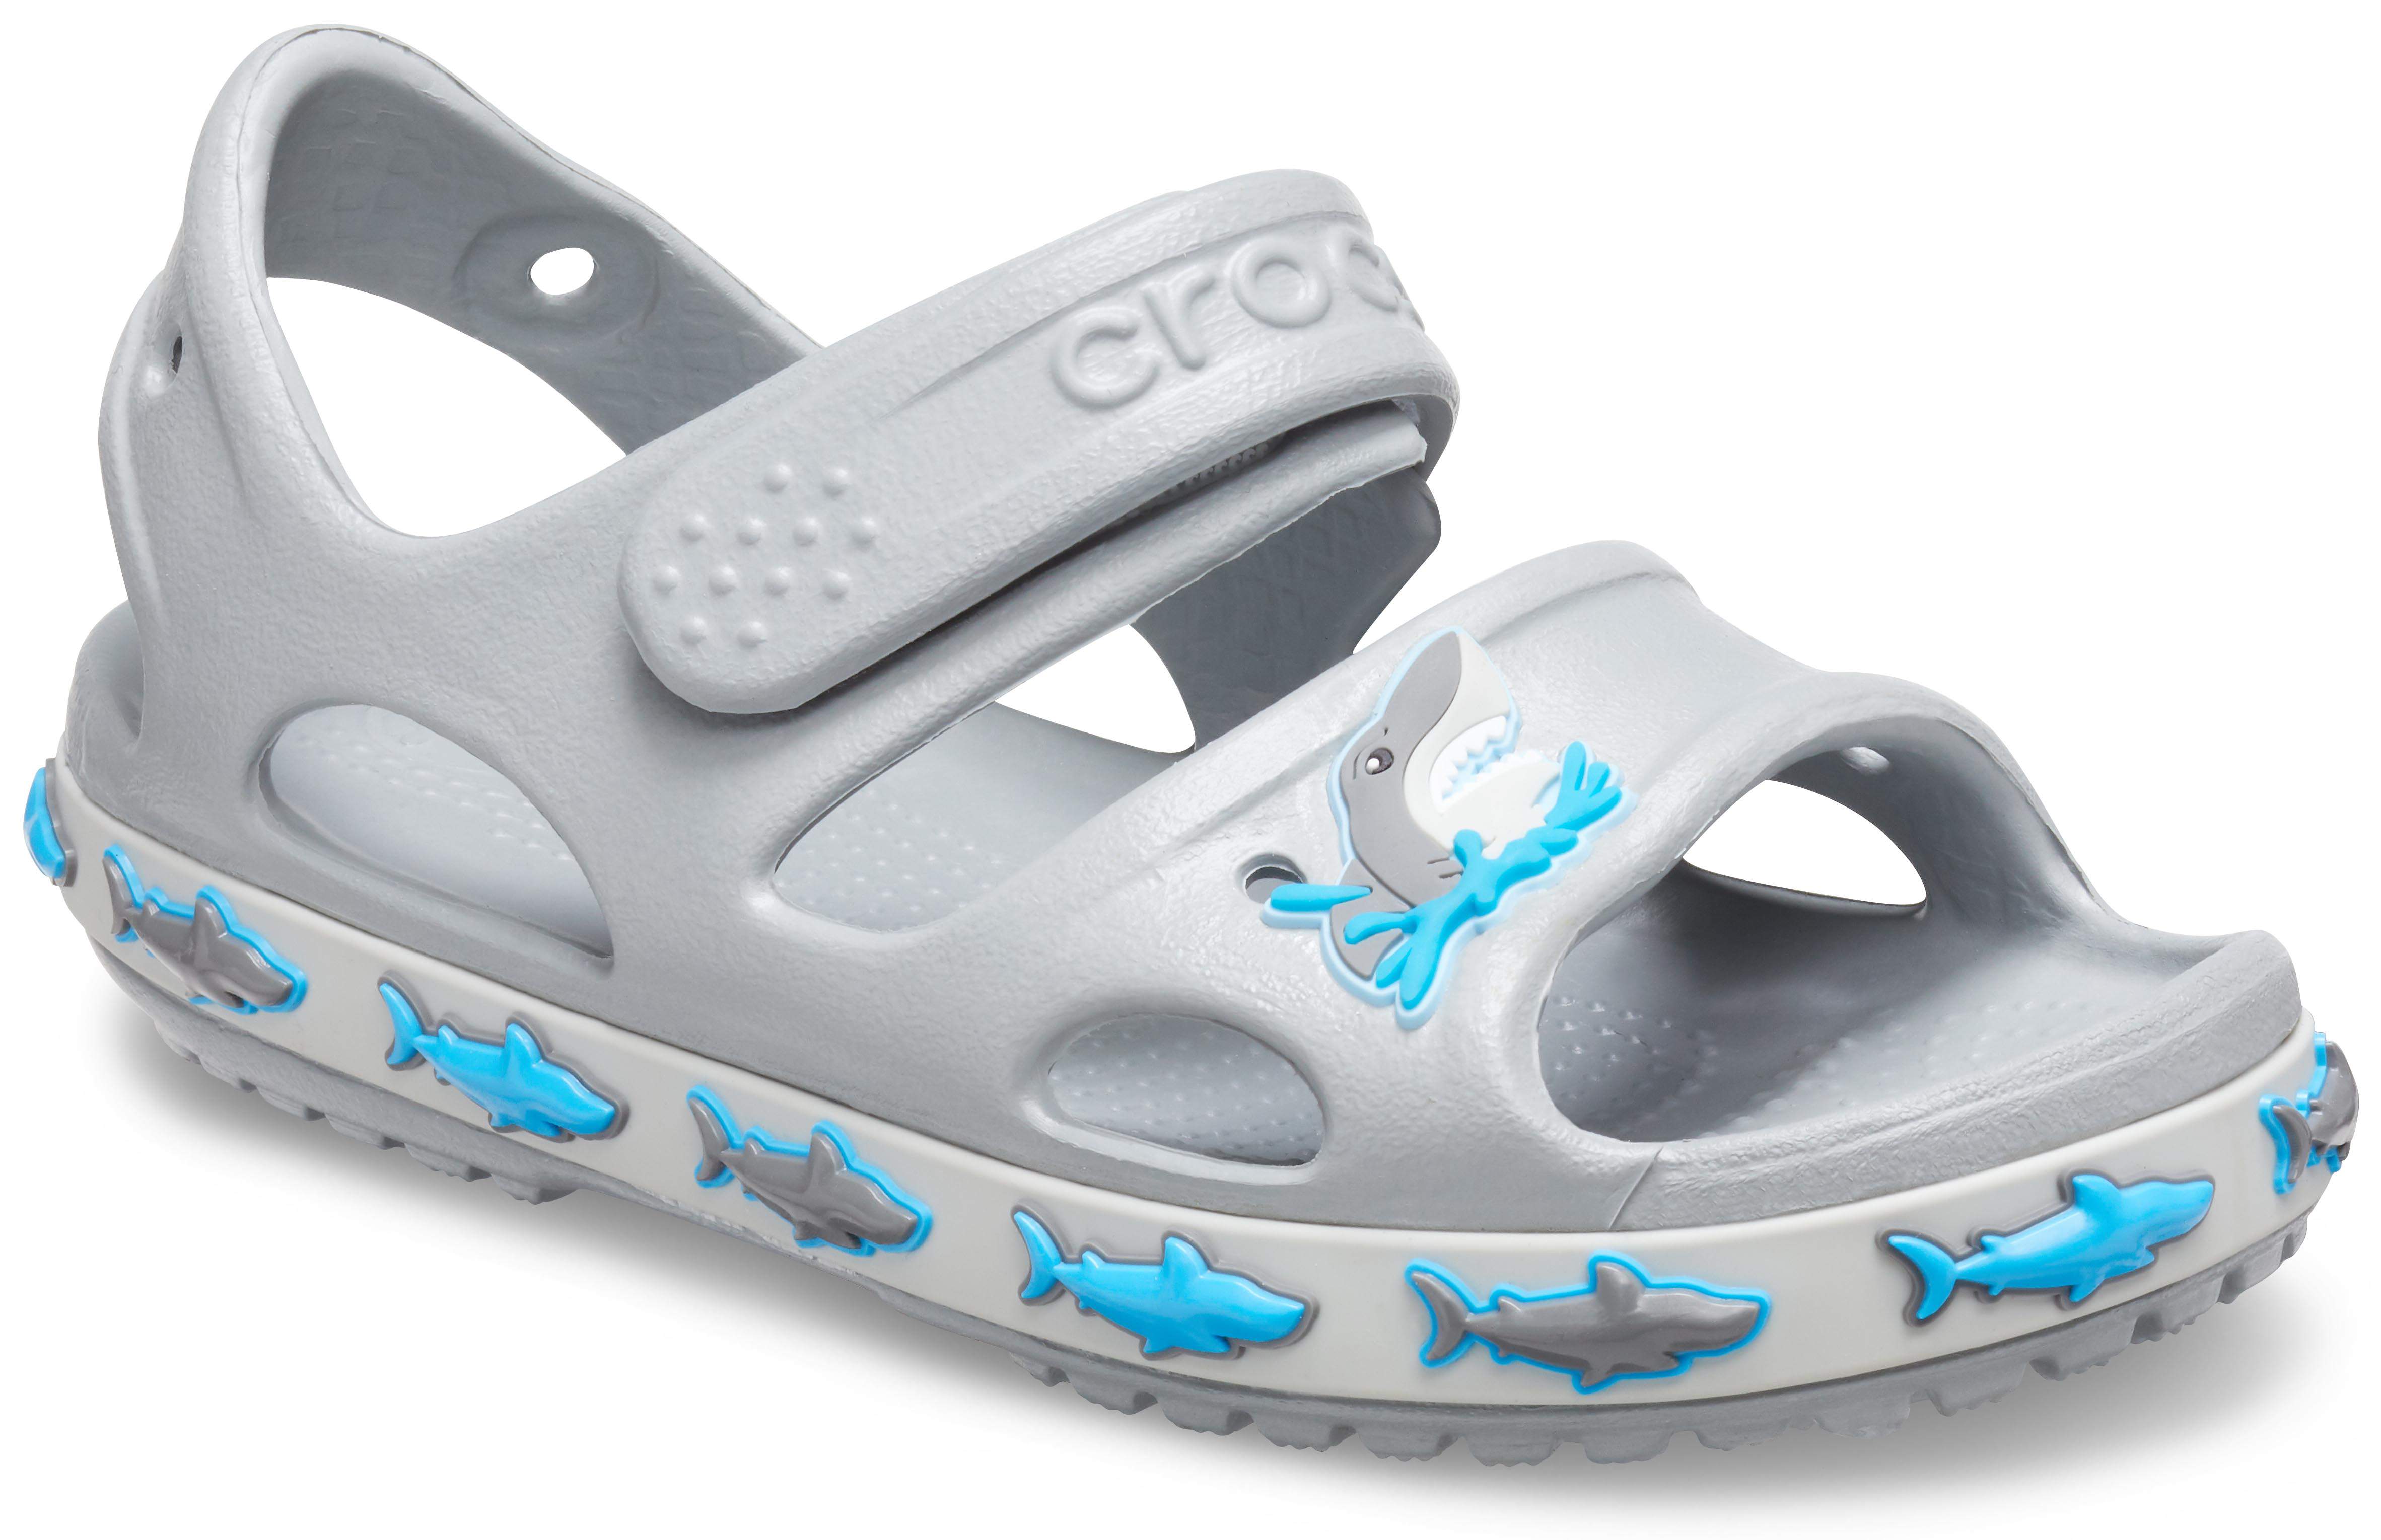 childrens crocs sandals